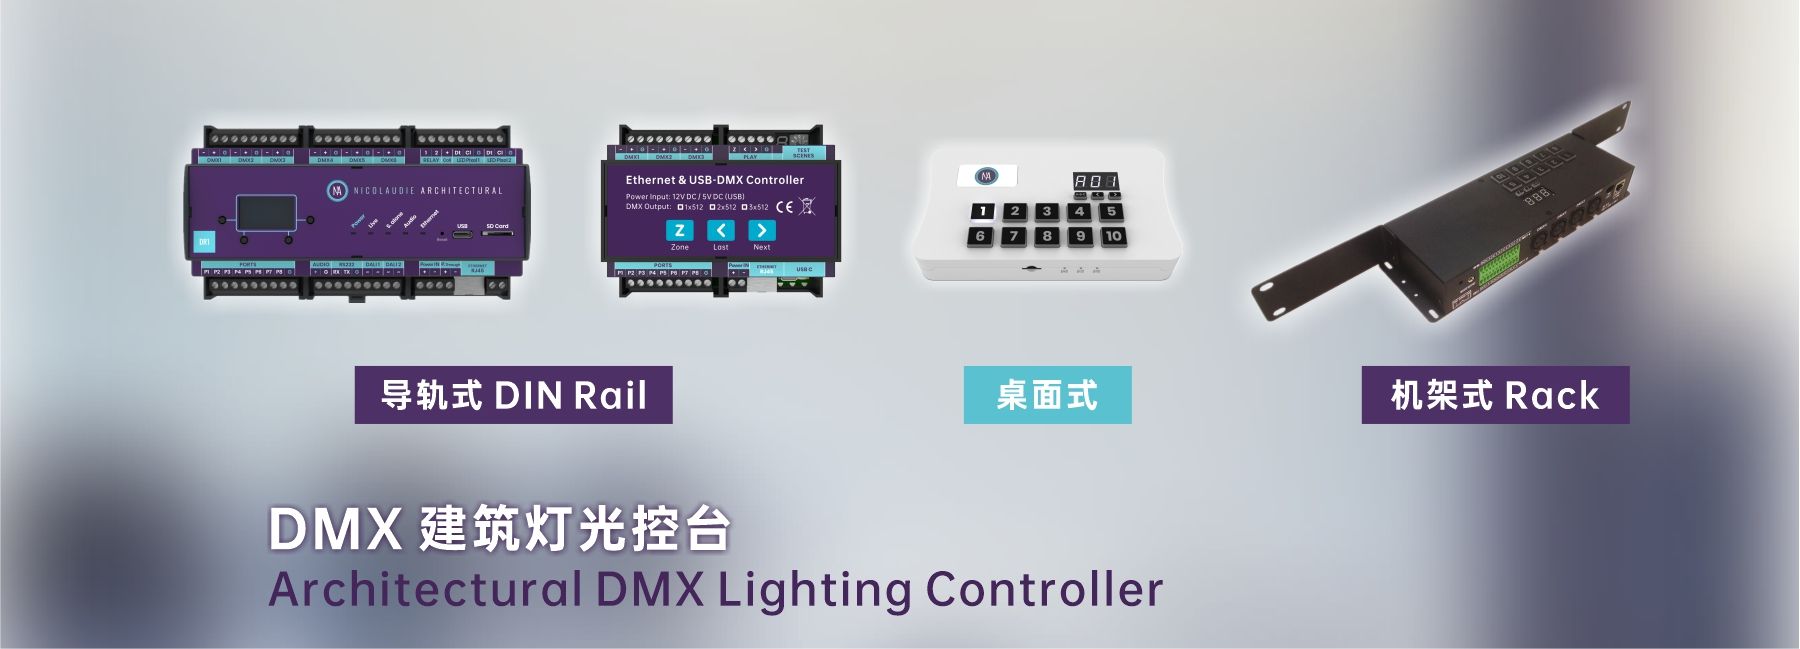 Architectural DMX Lighting Controller